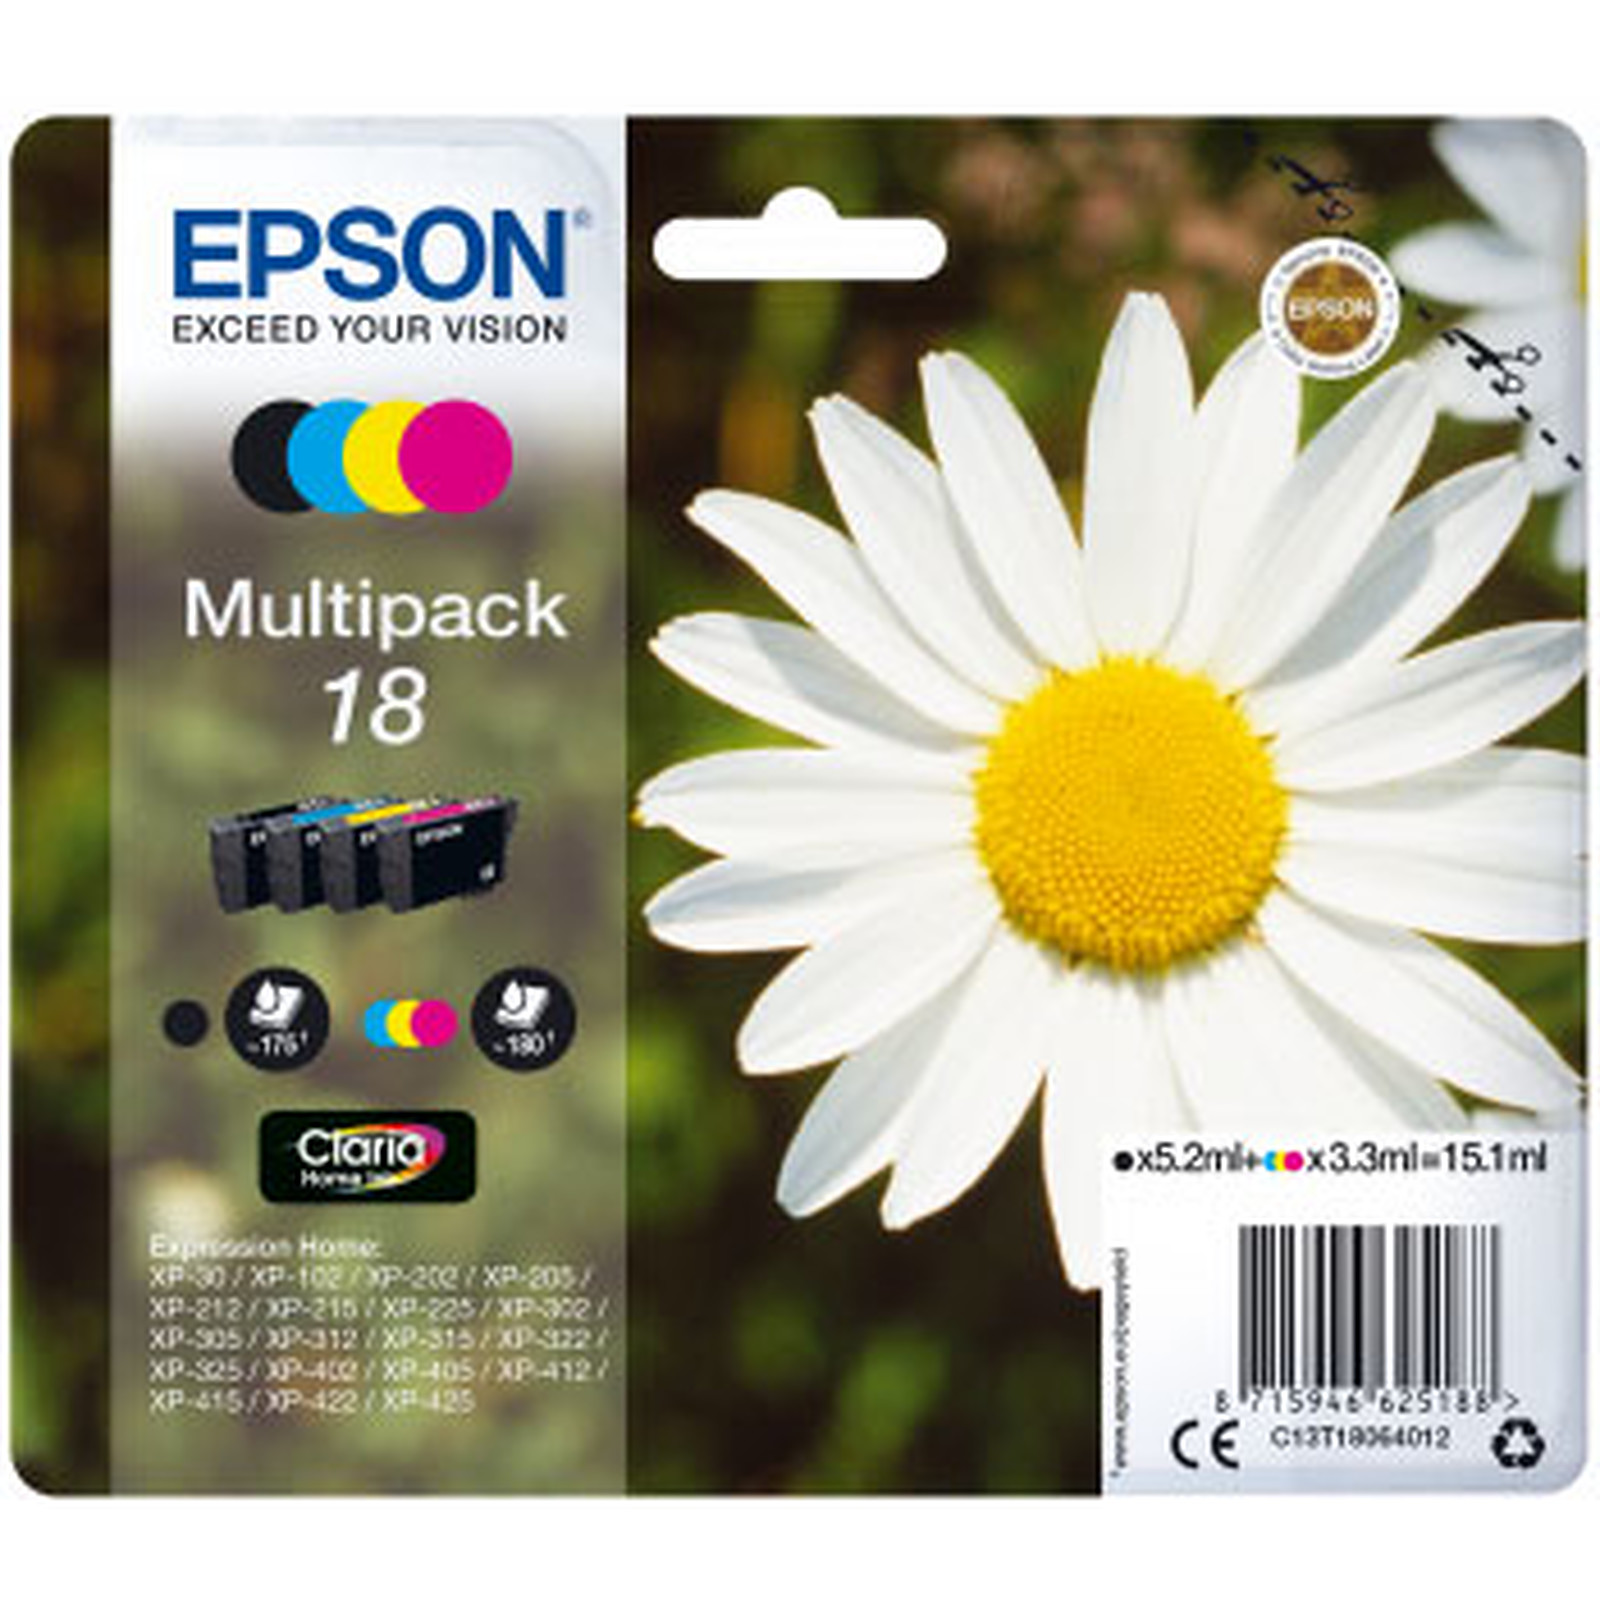 Epson MultiPack 18 - Cartouche imprimante Epson